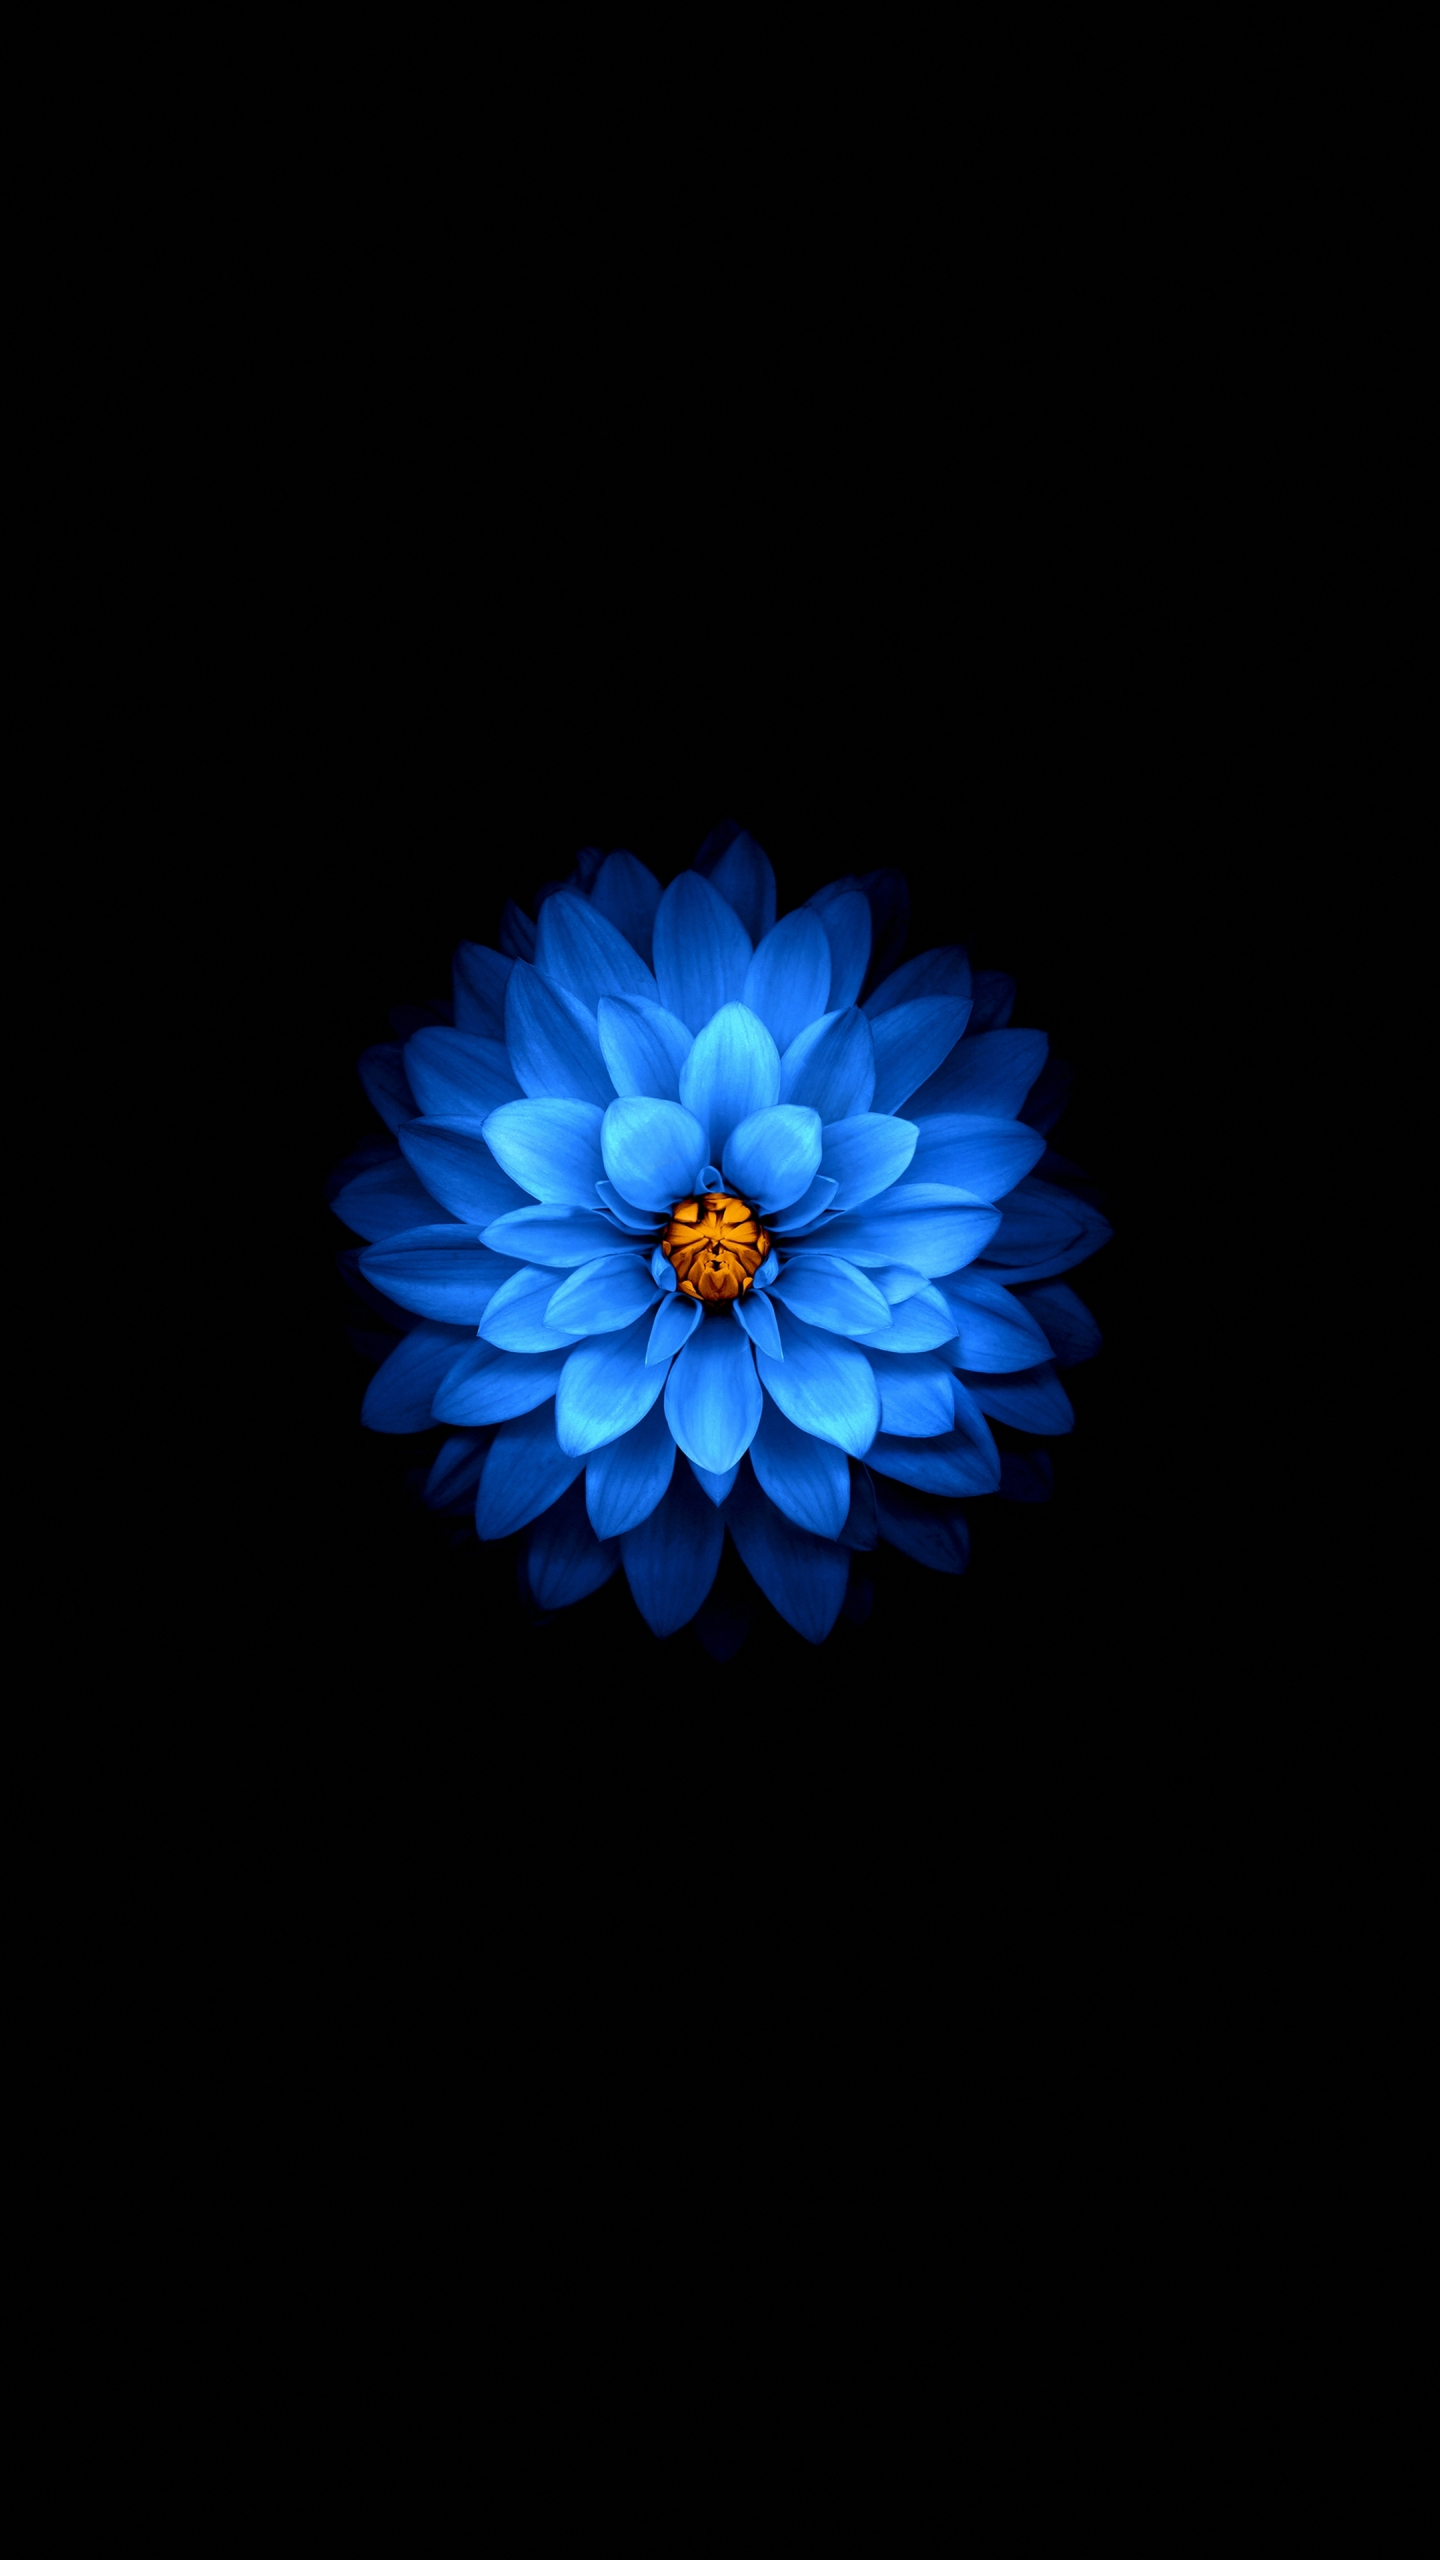 Download wallpaper 1440x2560 blue flower, dark, amoled, qhd samsung galaxy  s6, s7, edge, note, lg g4, 1440x2560 hd background, 25964